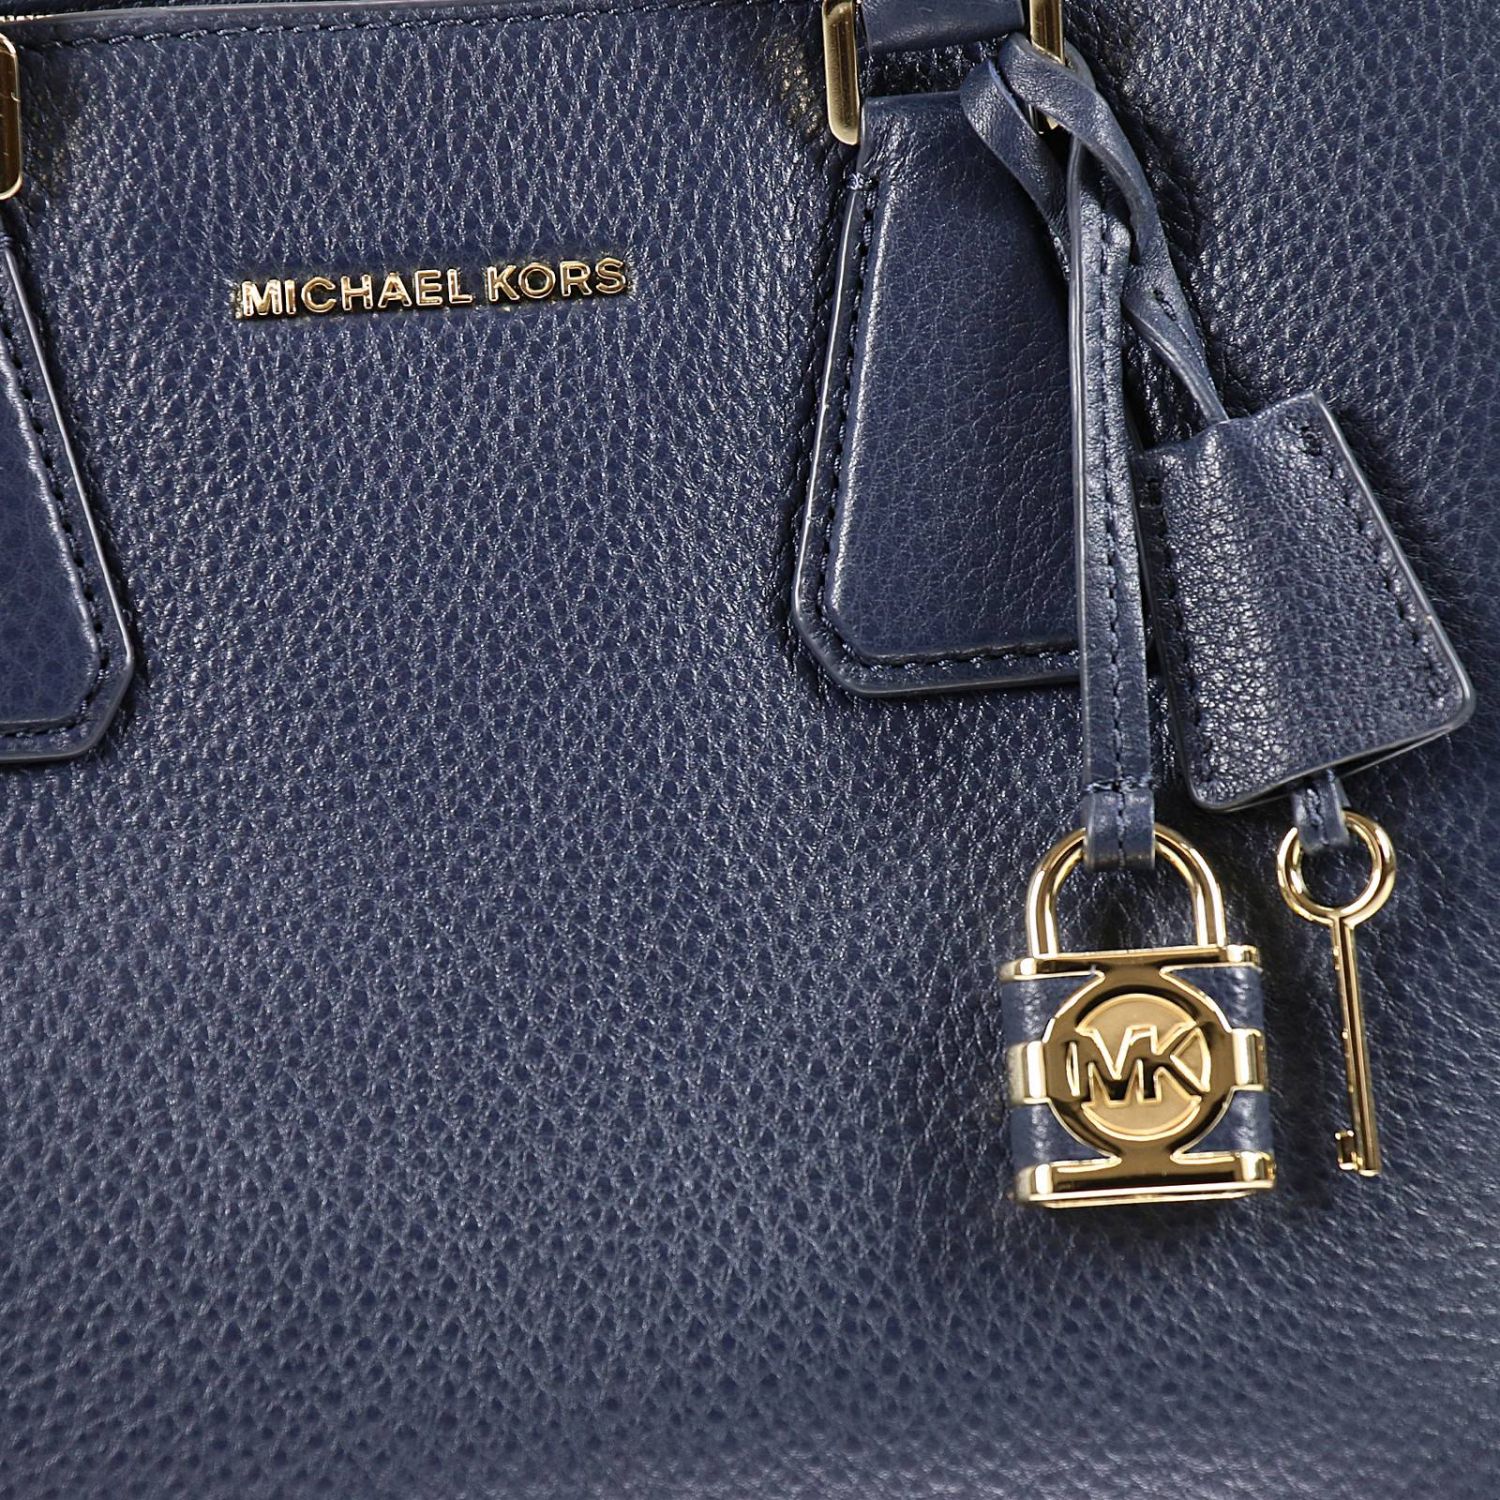 Michael Kors | Bags | Michael Kors Royal Blue Tote Bag E42 | Poshmark